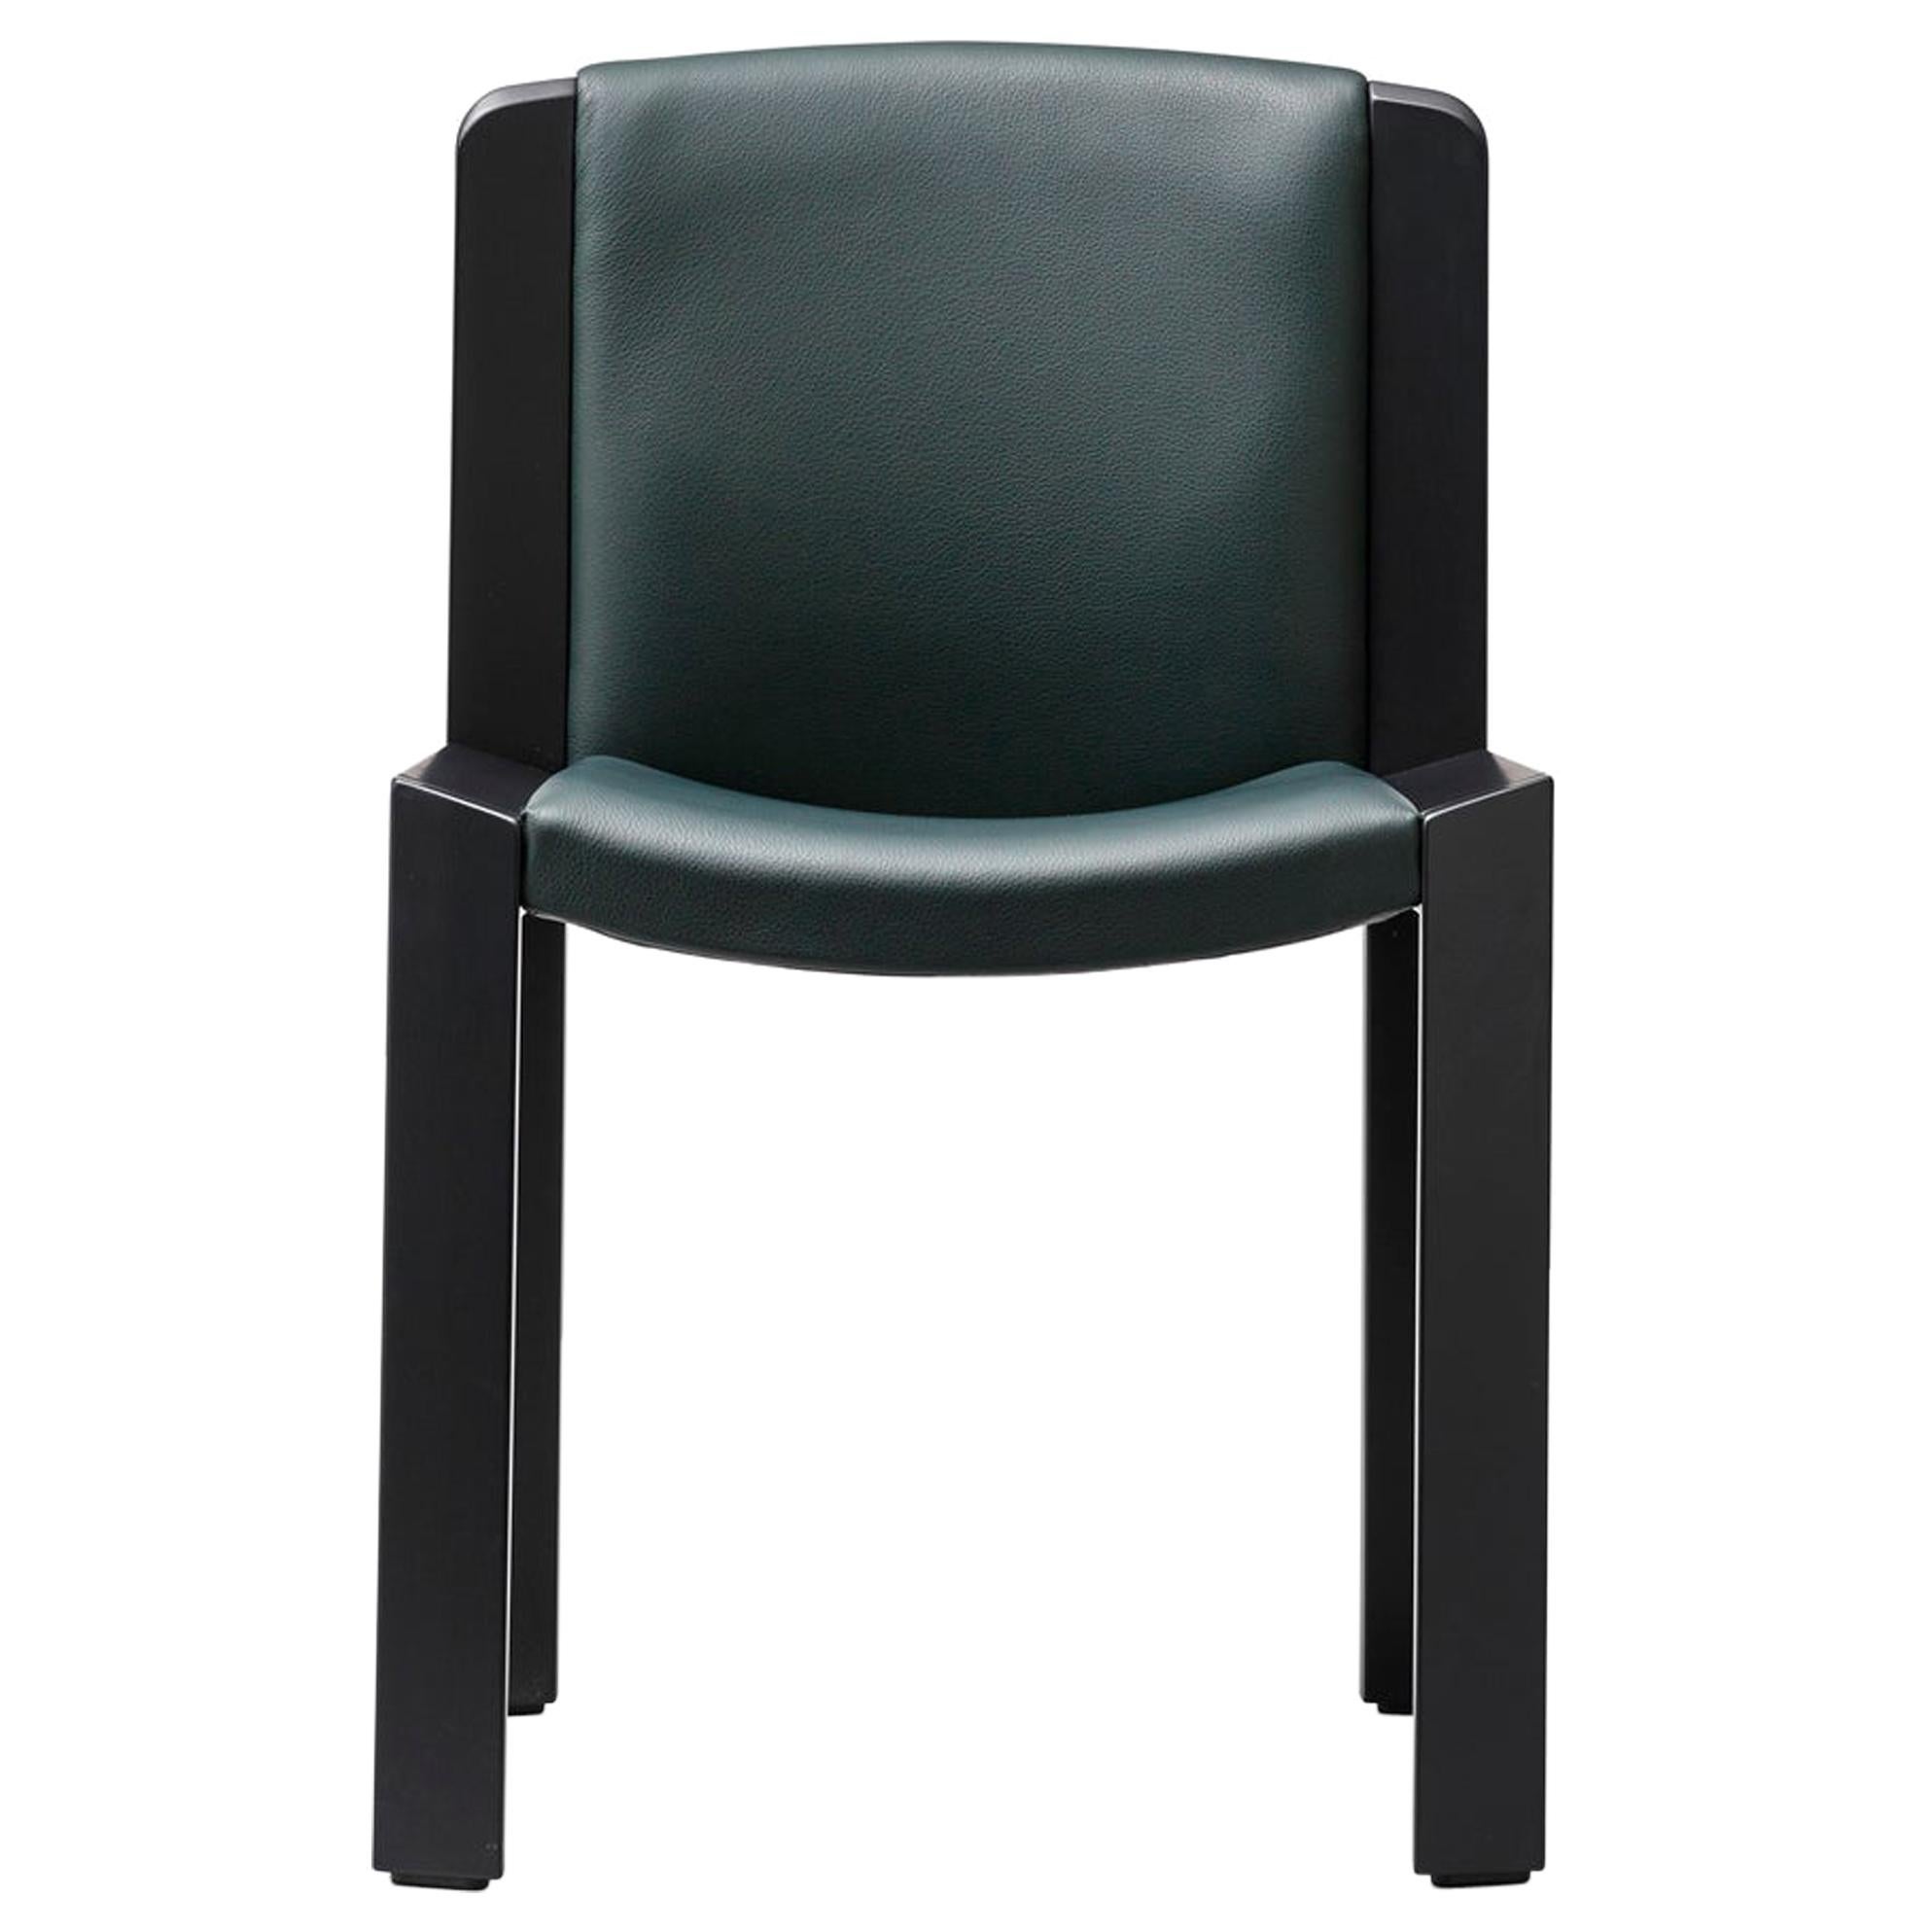 Joe Colombo 'Chair 300' Wood and Sørensen Leather by Karakter